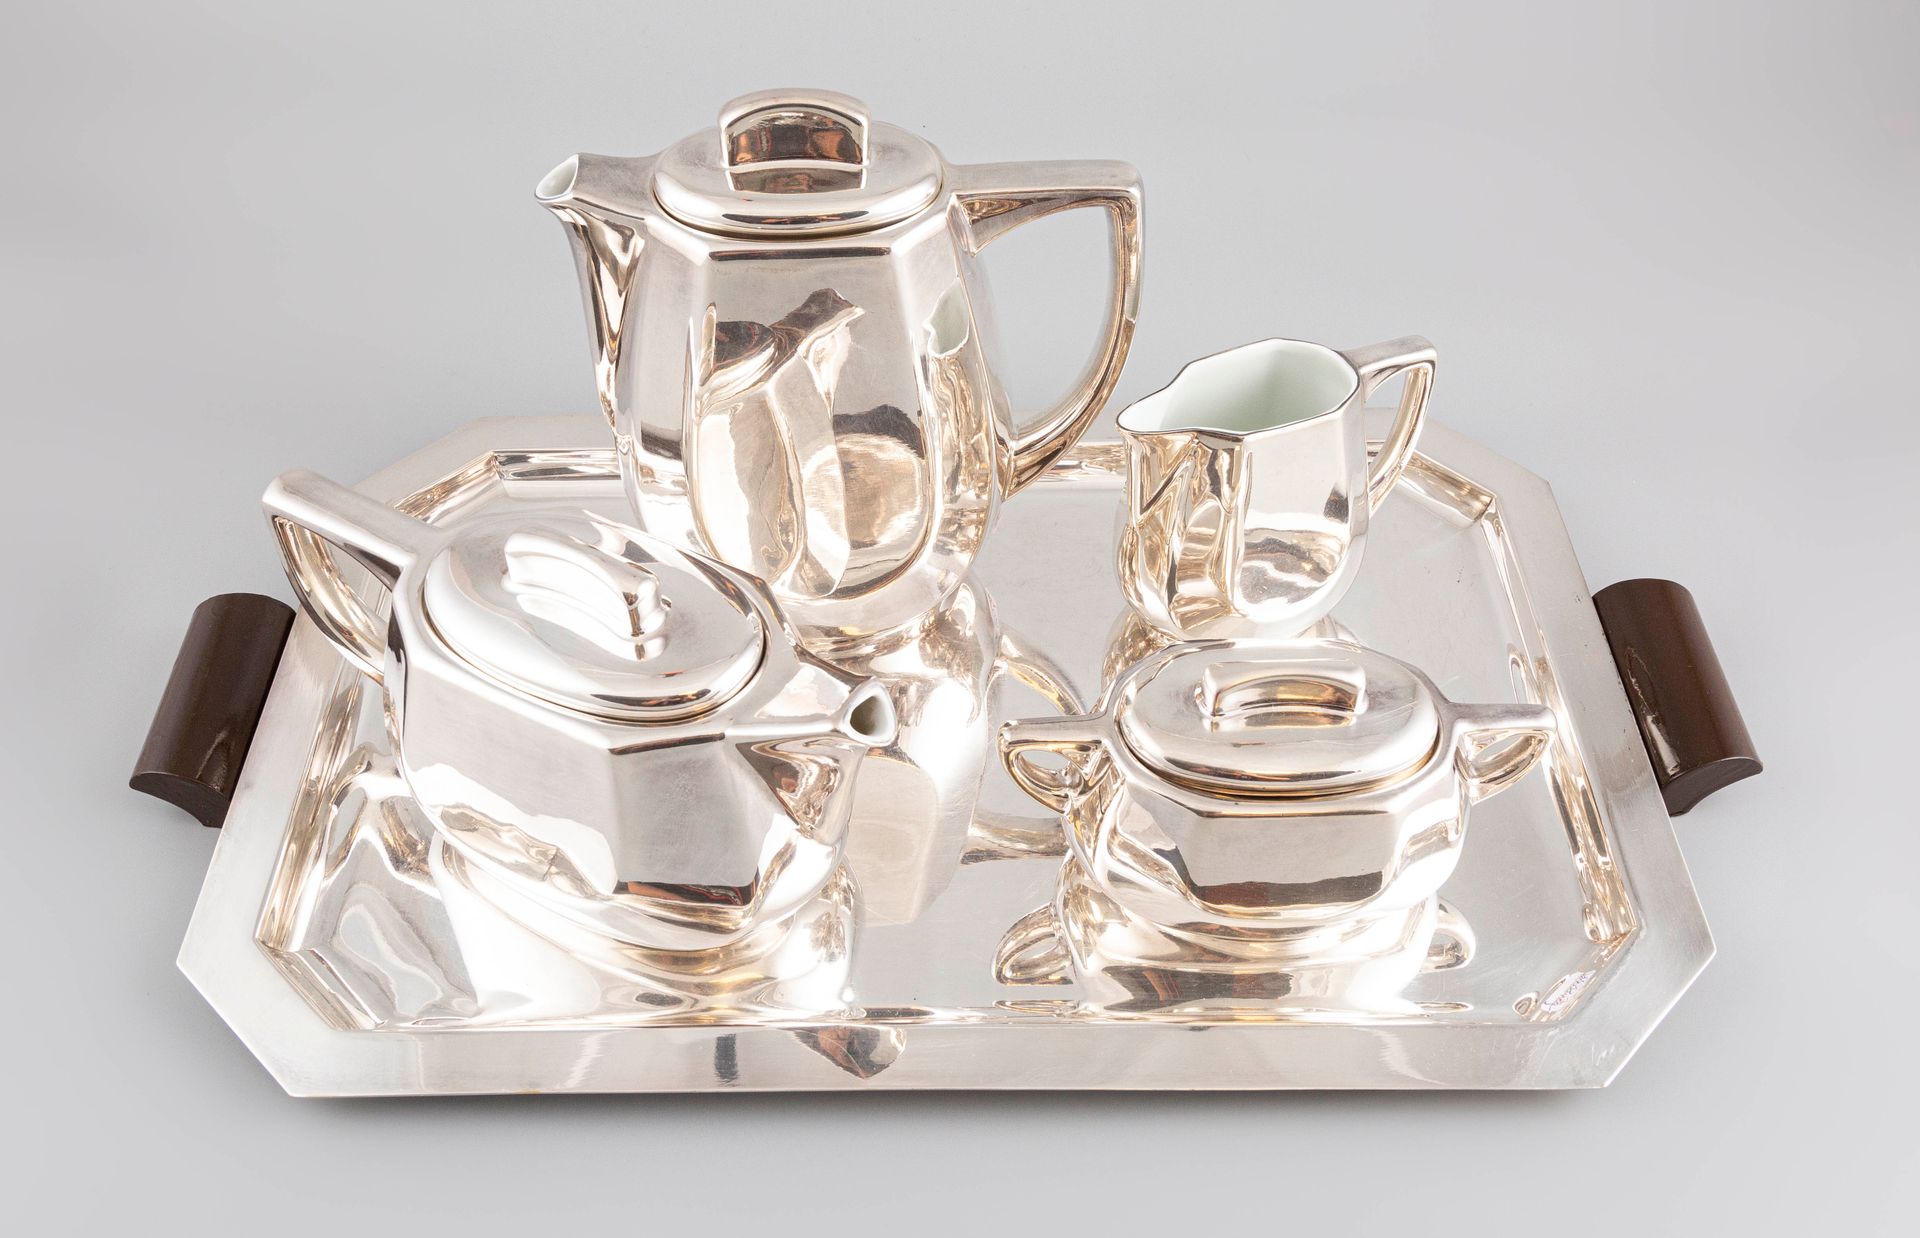 Null 银色瓷器服务包括一个咖啡壶，一个茶壶，一个有盖的糖碗，一个牛奶壶和一个银色的金属托盘。(托盘已被划伤和损坏）。)